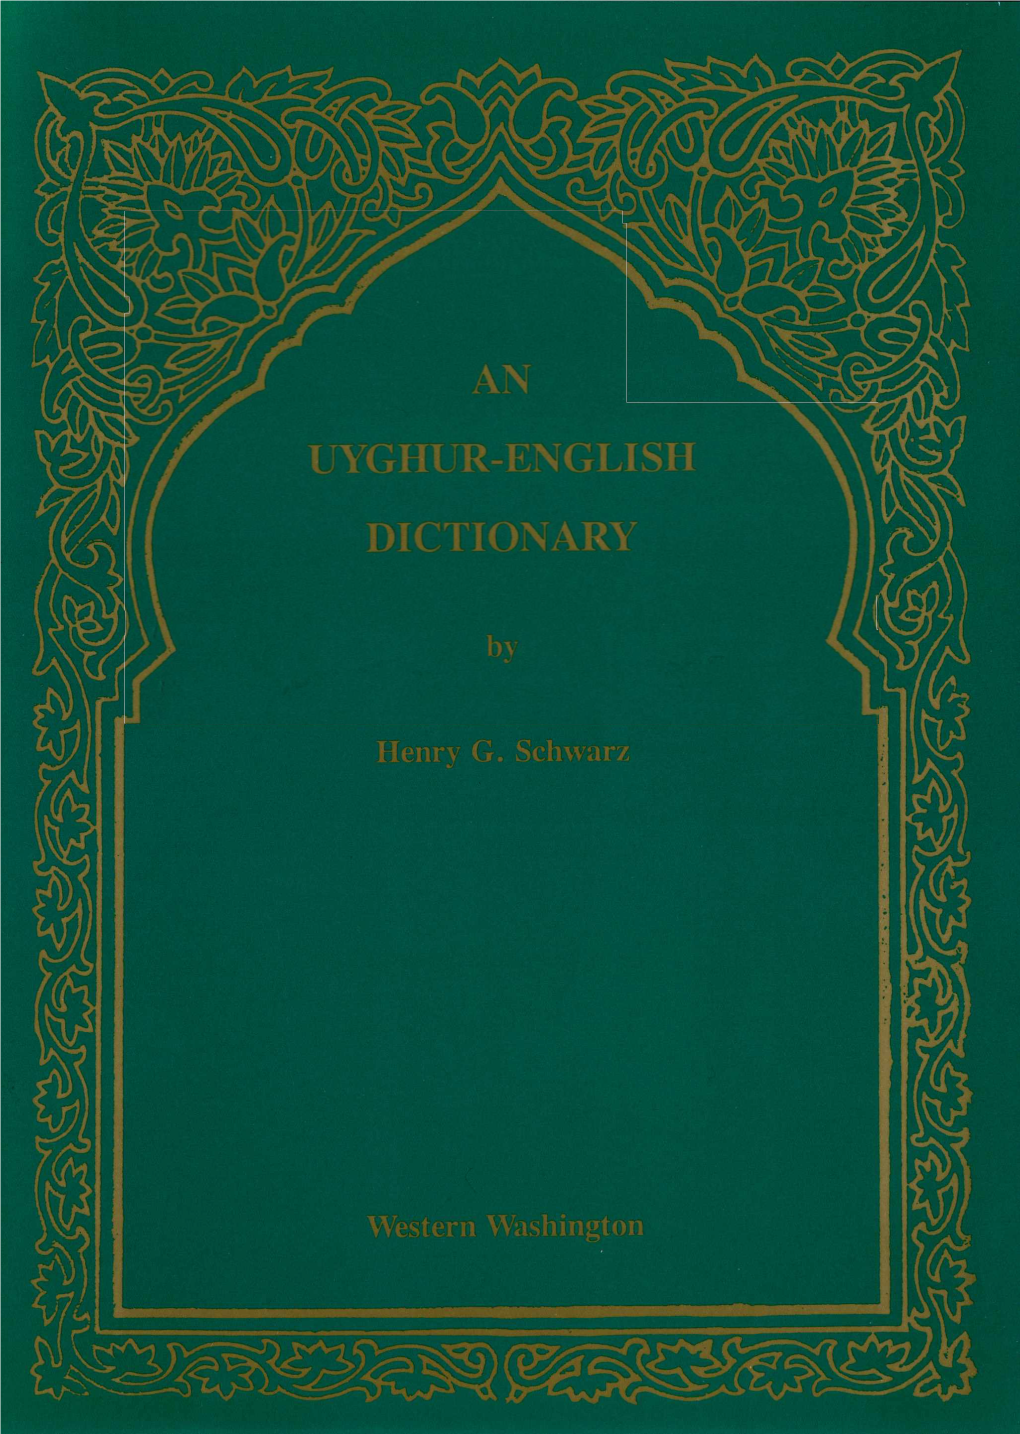 An Uyghur-English Dictionary